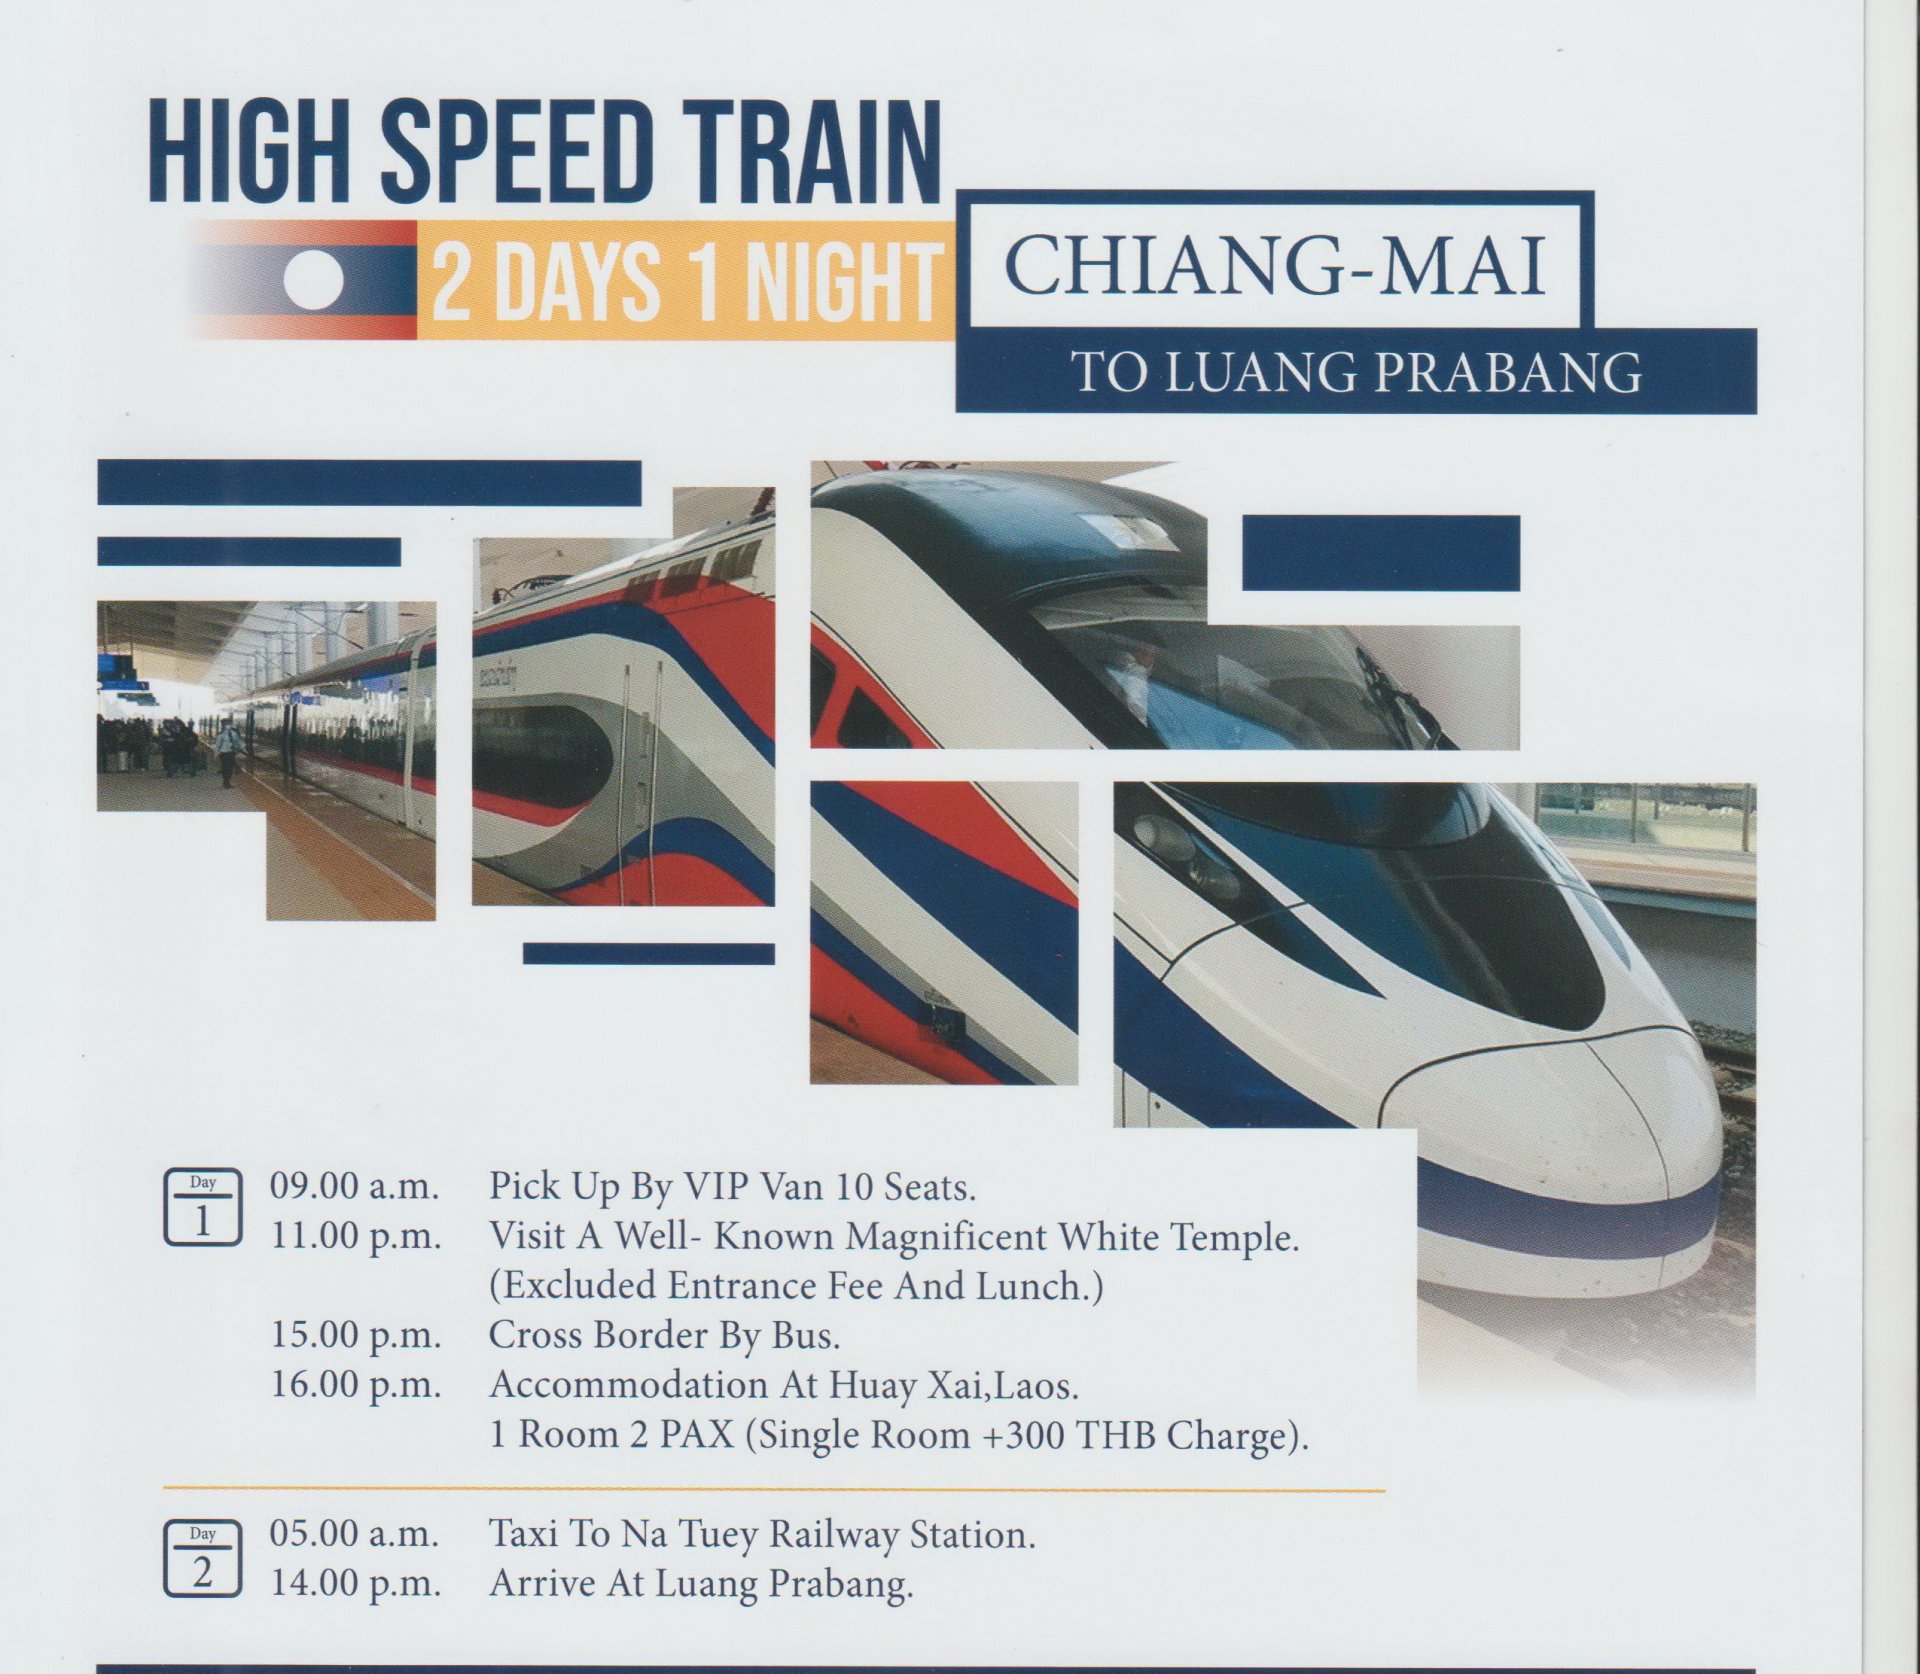 High Speed Train Chiang Mai to Luang Prabang